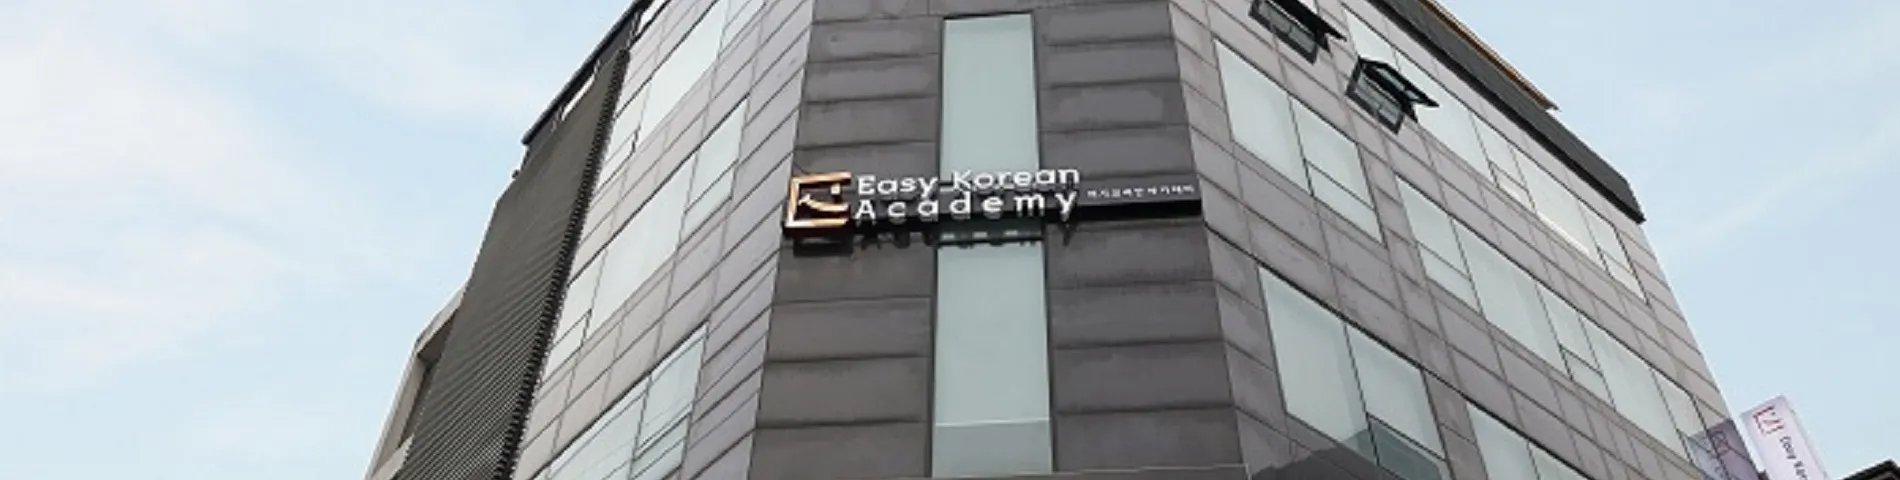 Easy Korean Academy resim 1